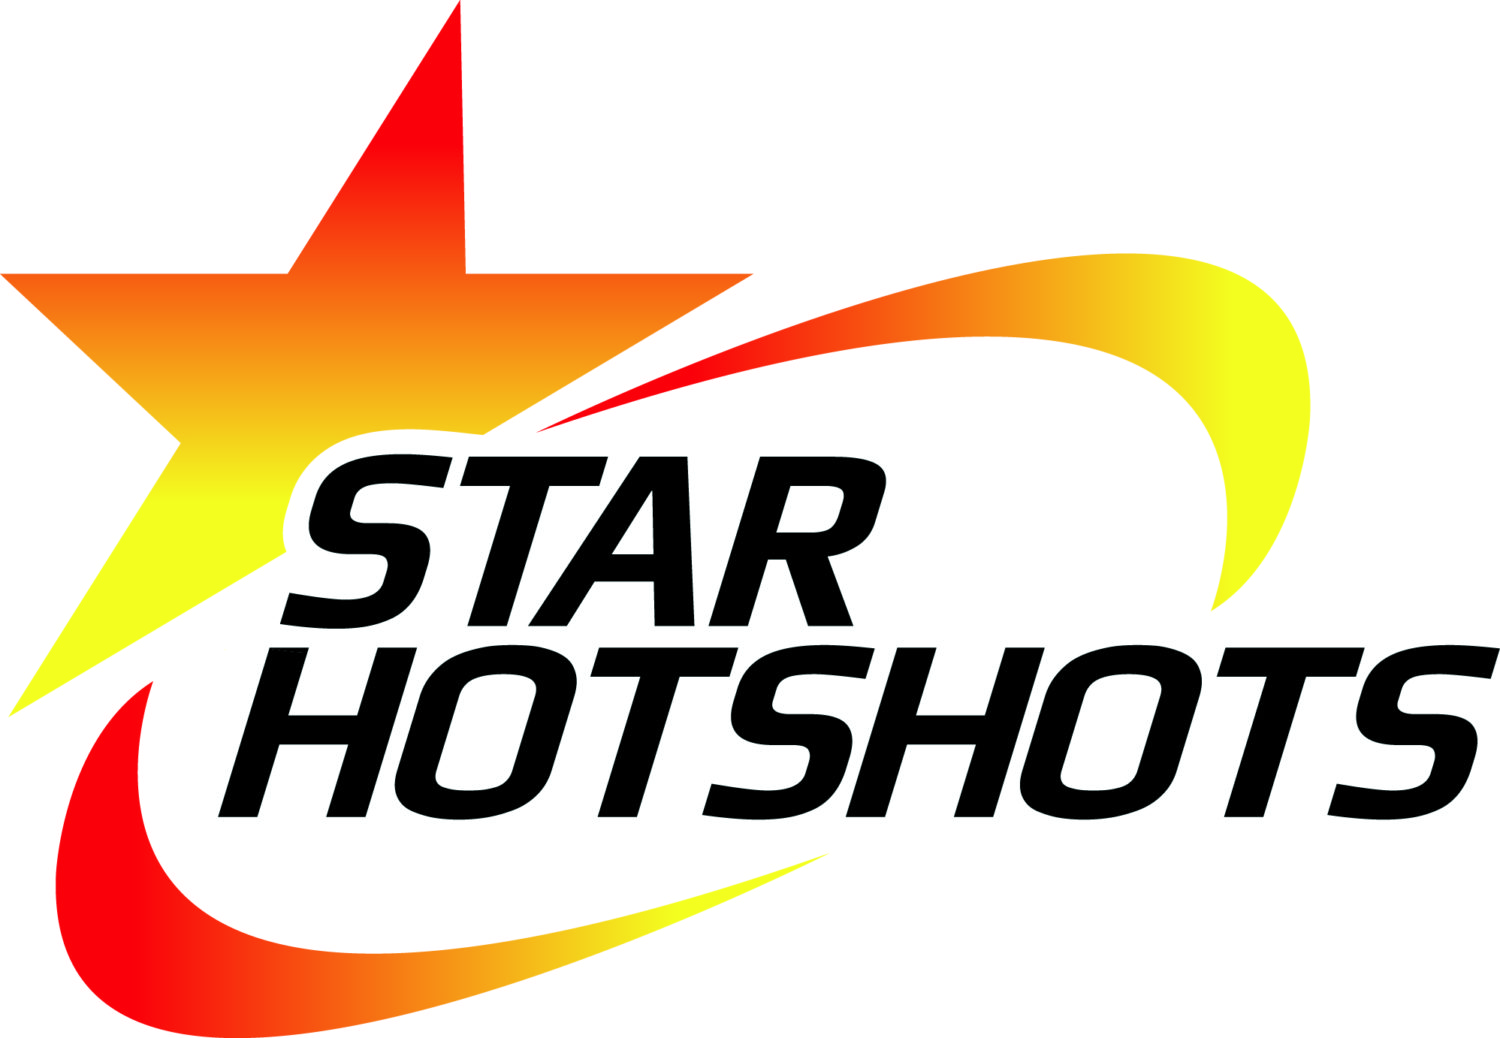 Star Hotshots Logo - Careers in Sport